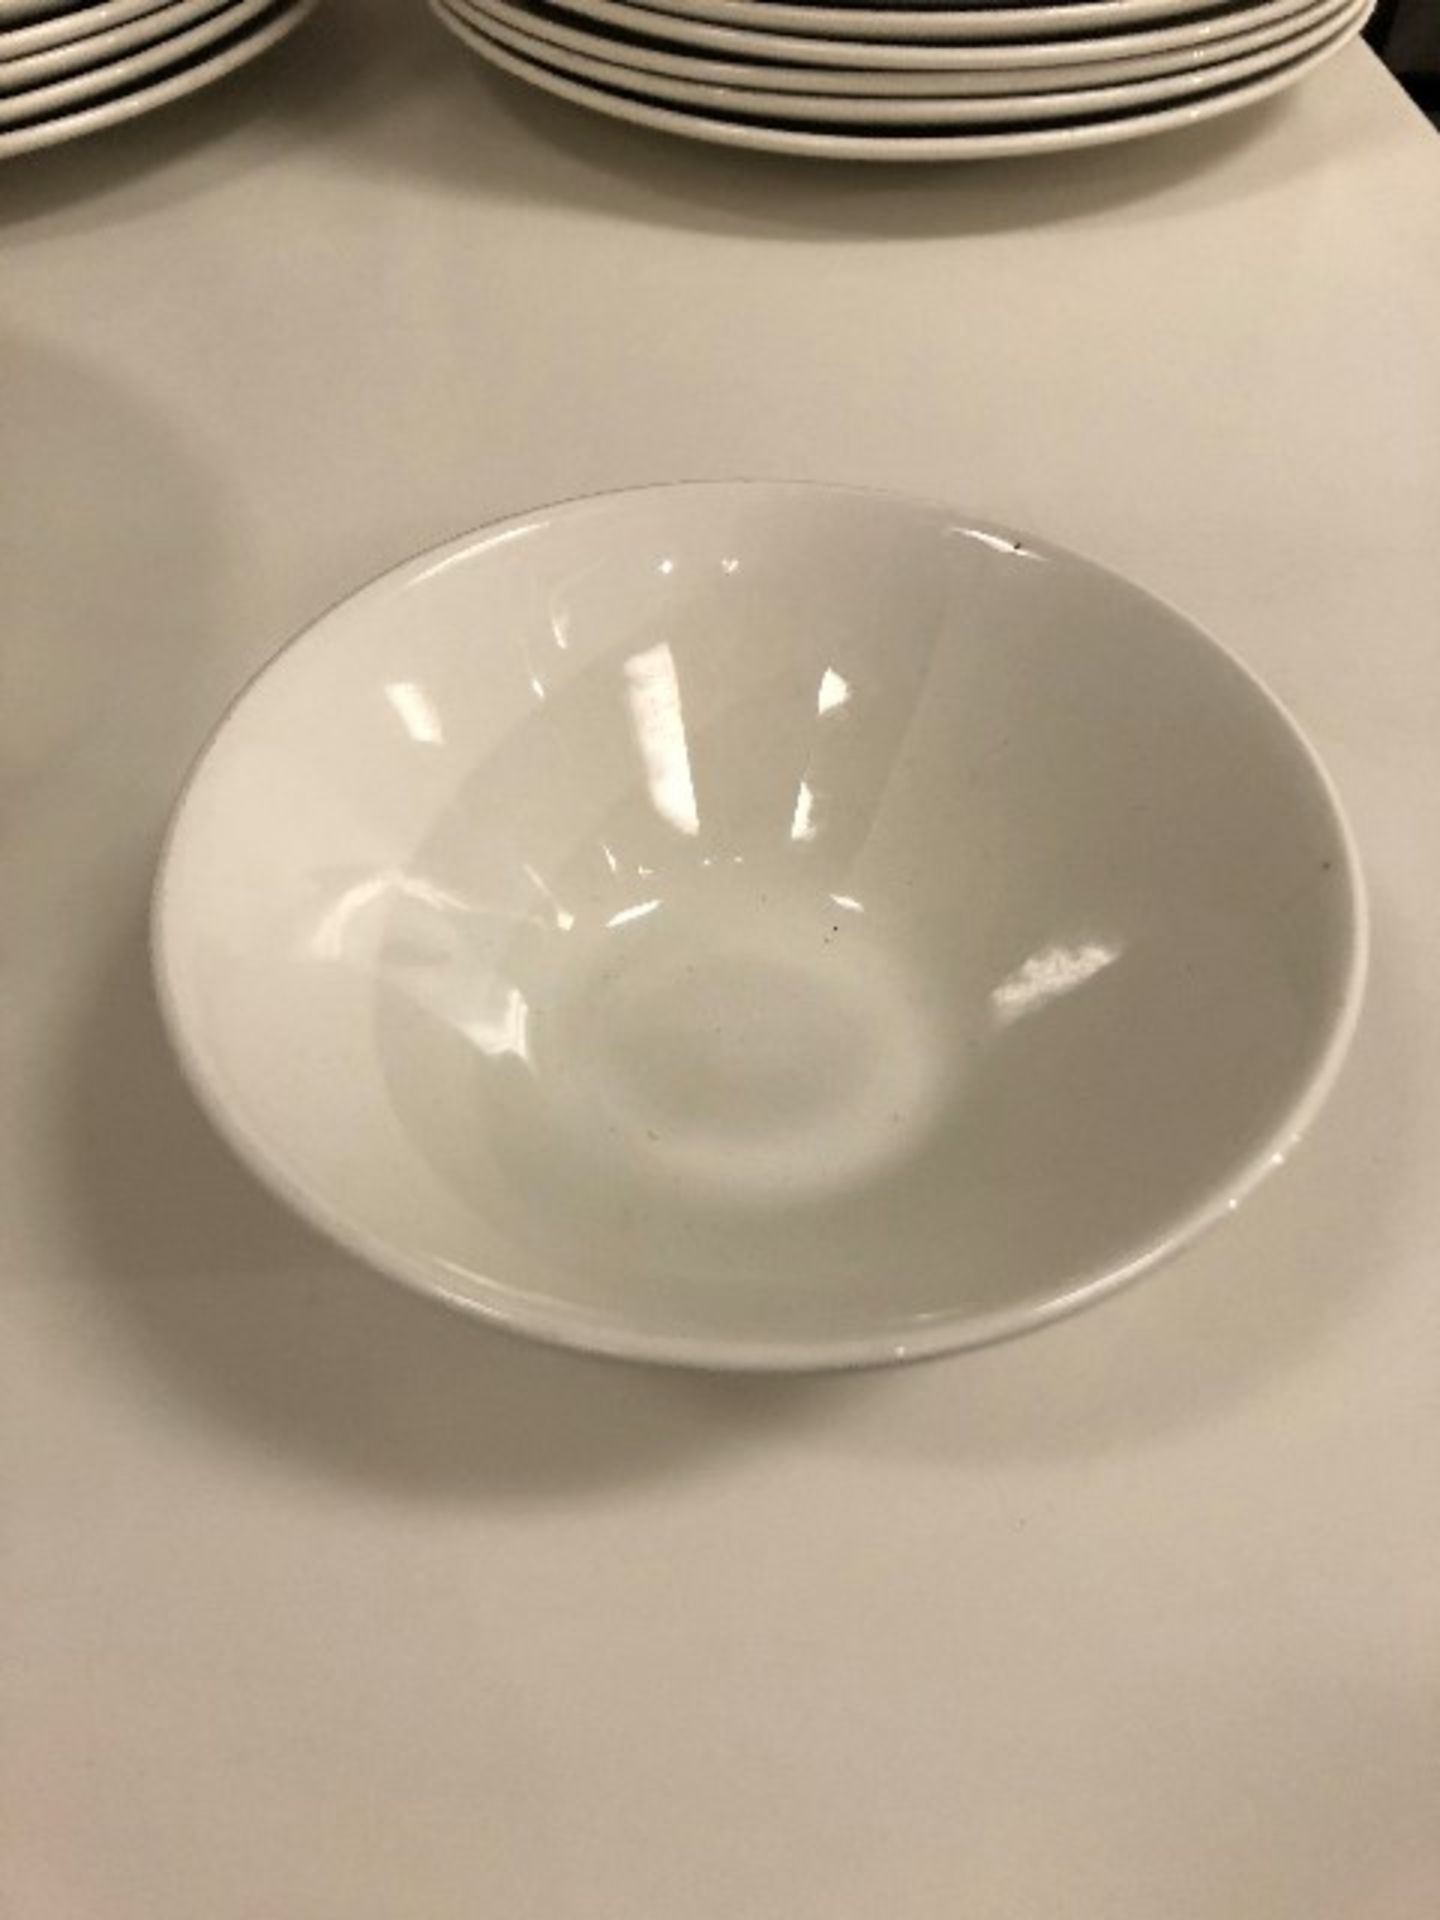 Round bowls, 6.5”, 28 pcs (Lot) - Image 2 of 2